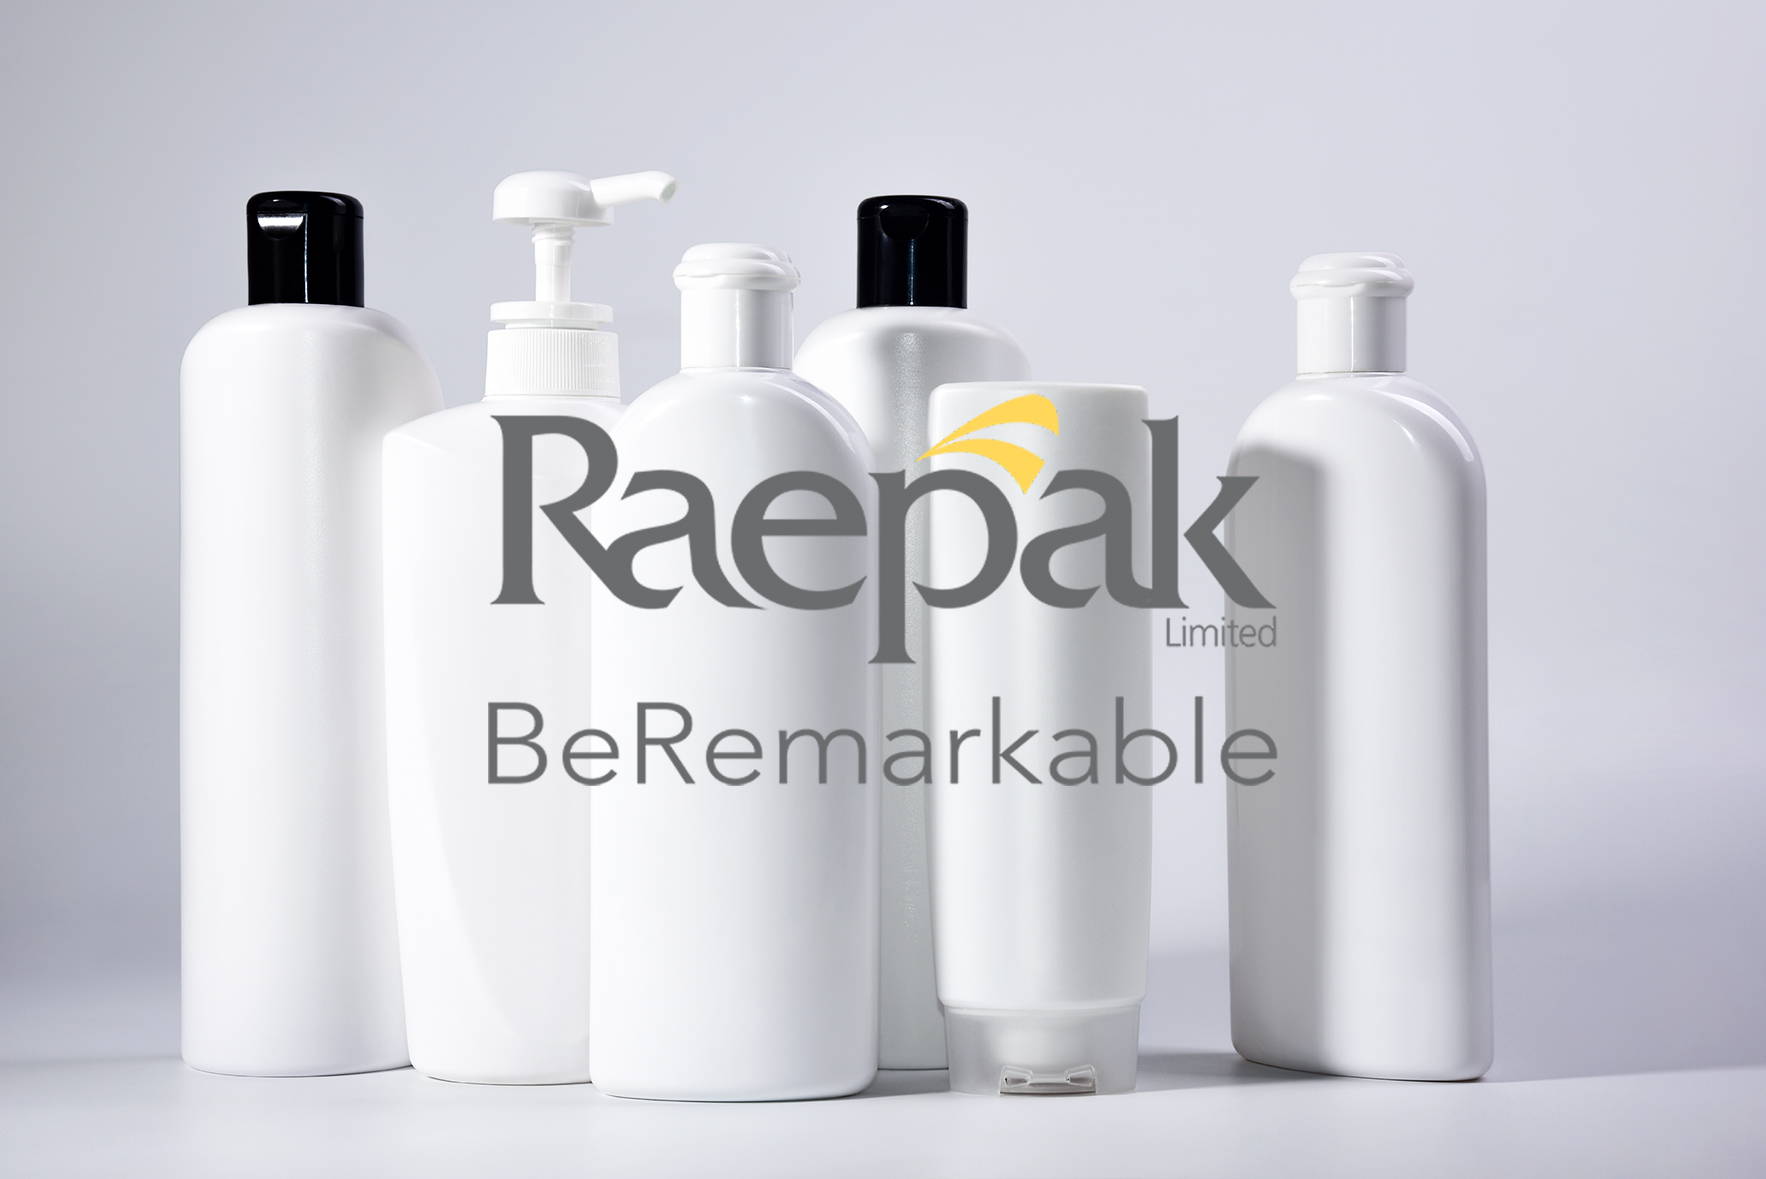  Raepak Limited acquisition